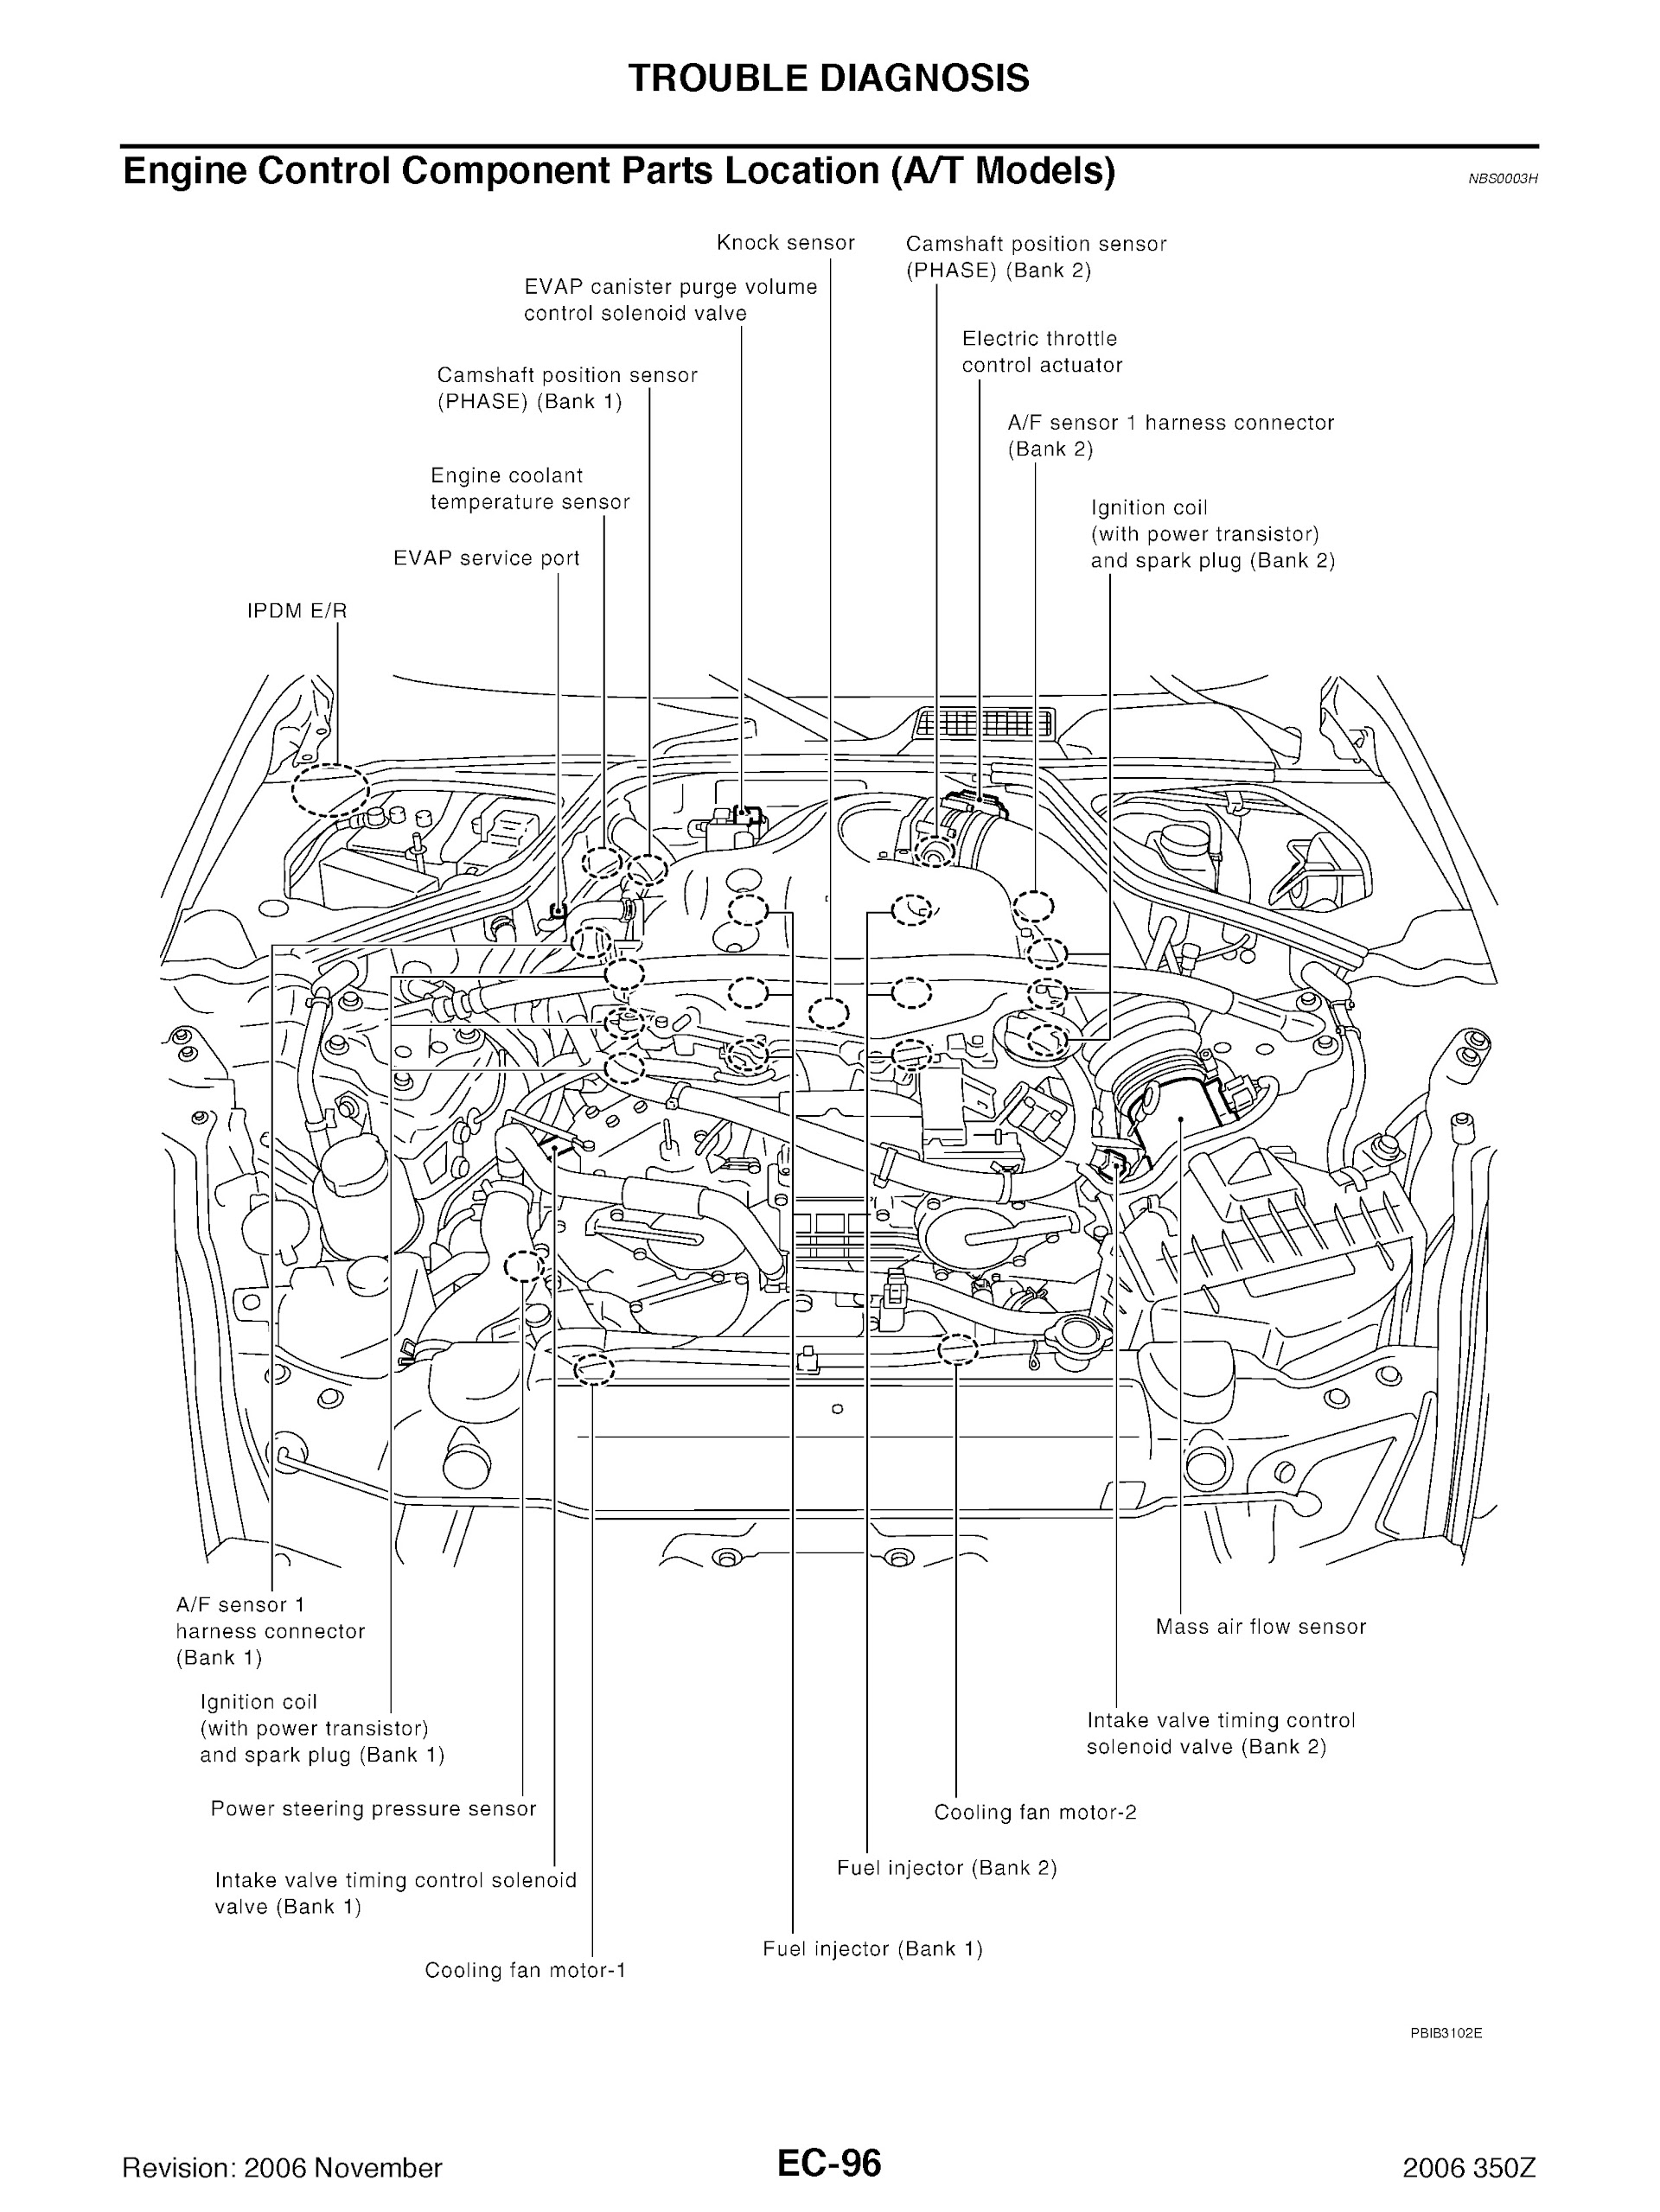 2005-2006 Nissan 350Z Repair Manual, Engine Control Component Parts Location (A/T Models)